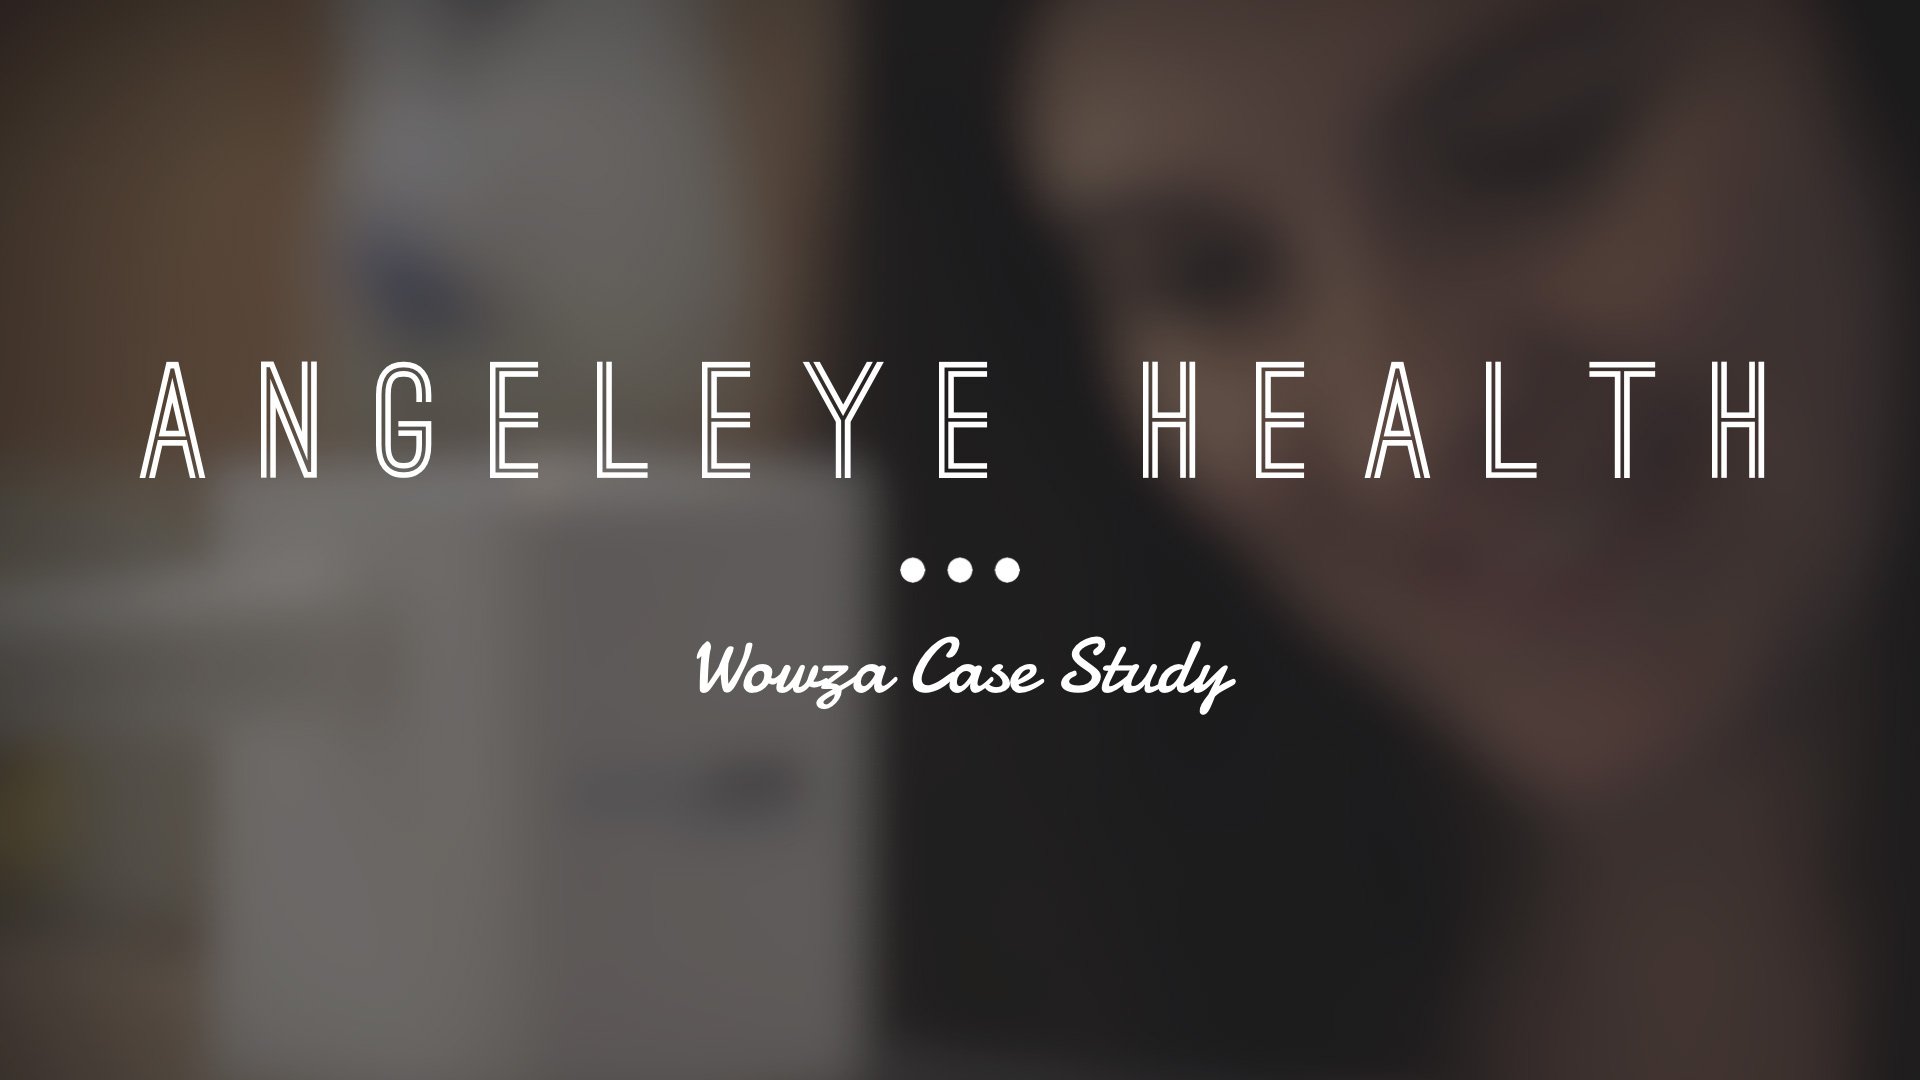 Case Study Angeleye Health 24 7 Icu Monitoring Wowza